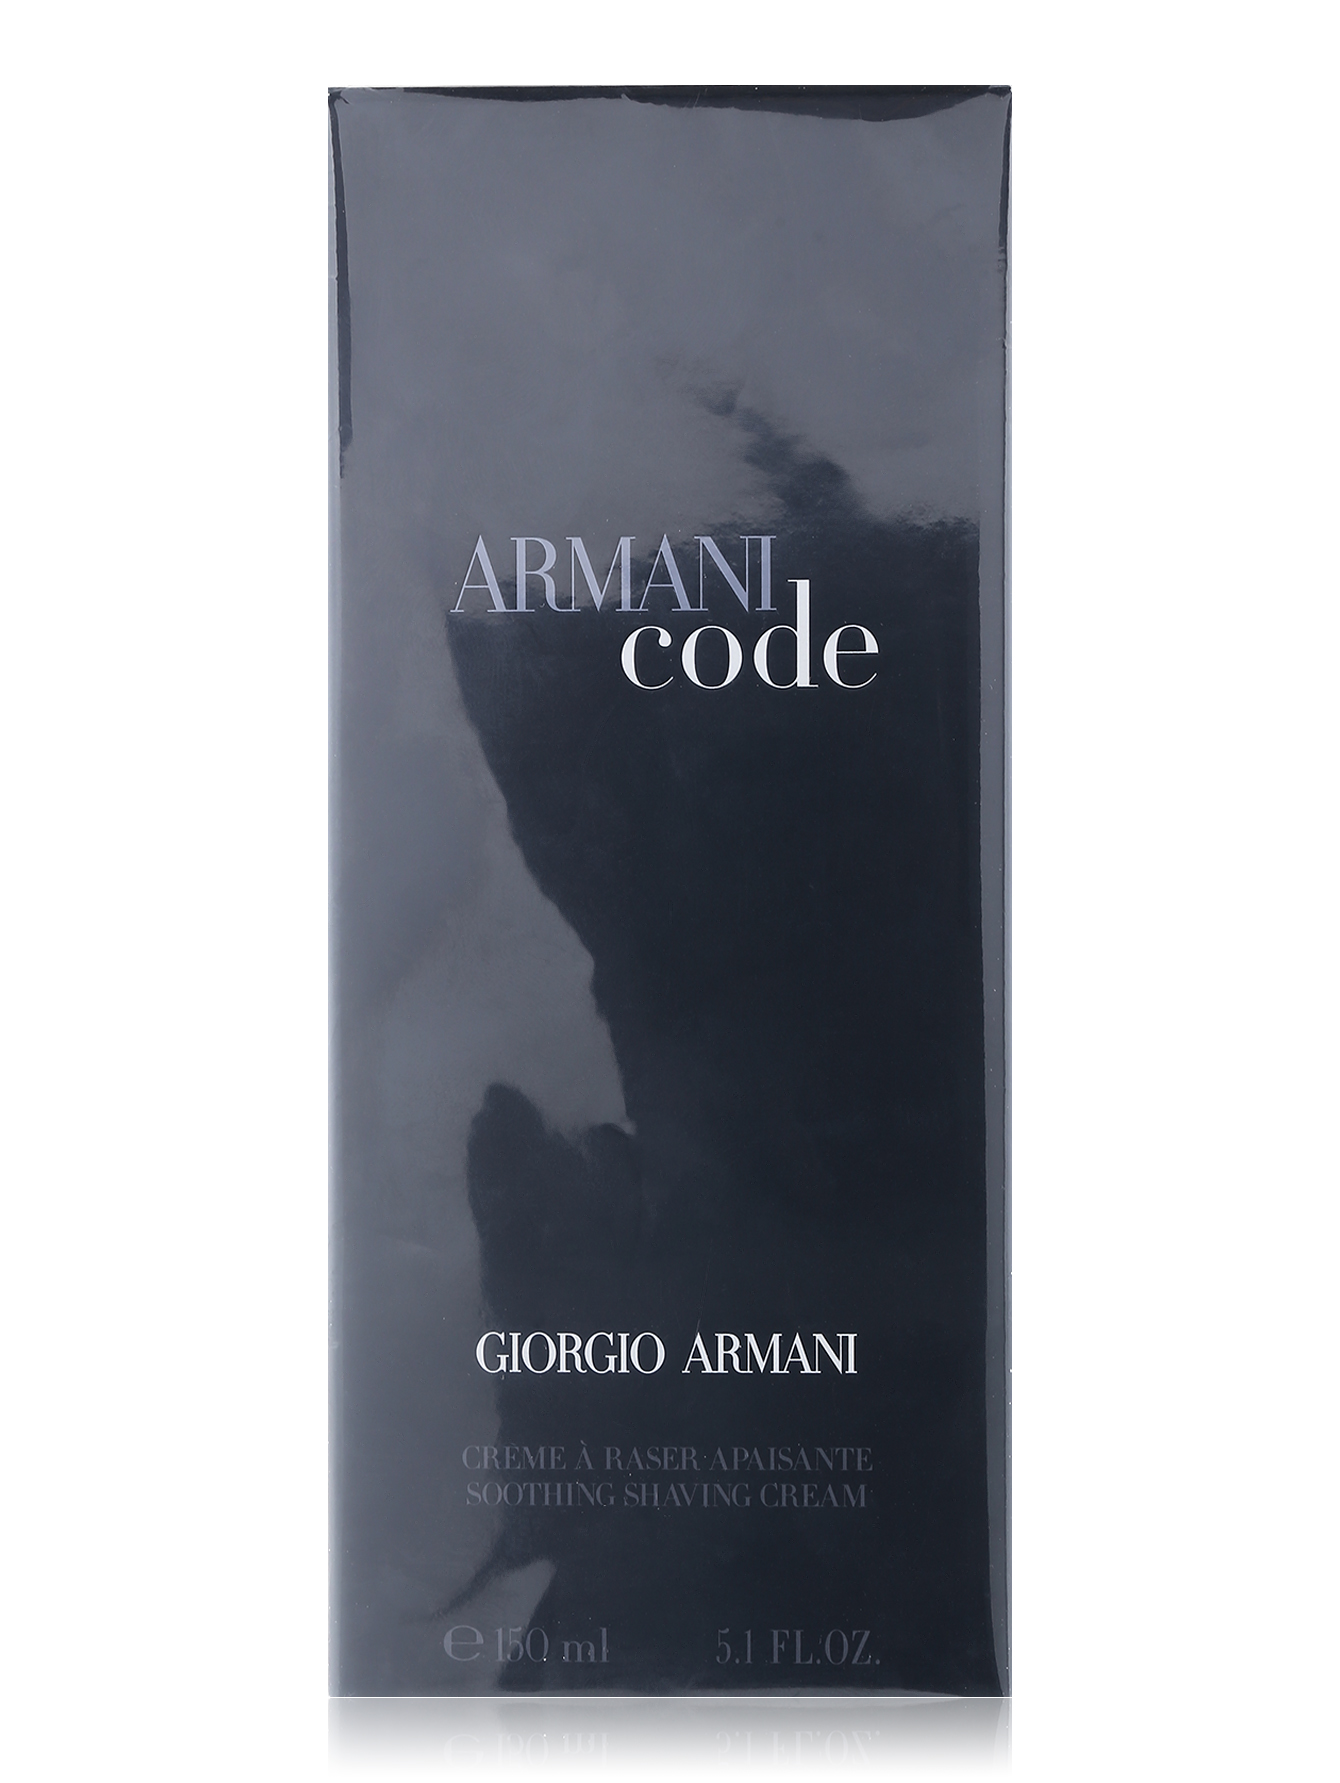  Крем для бритья - Armani Code, 150ml - Общий вид